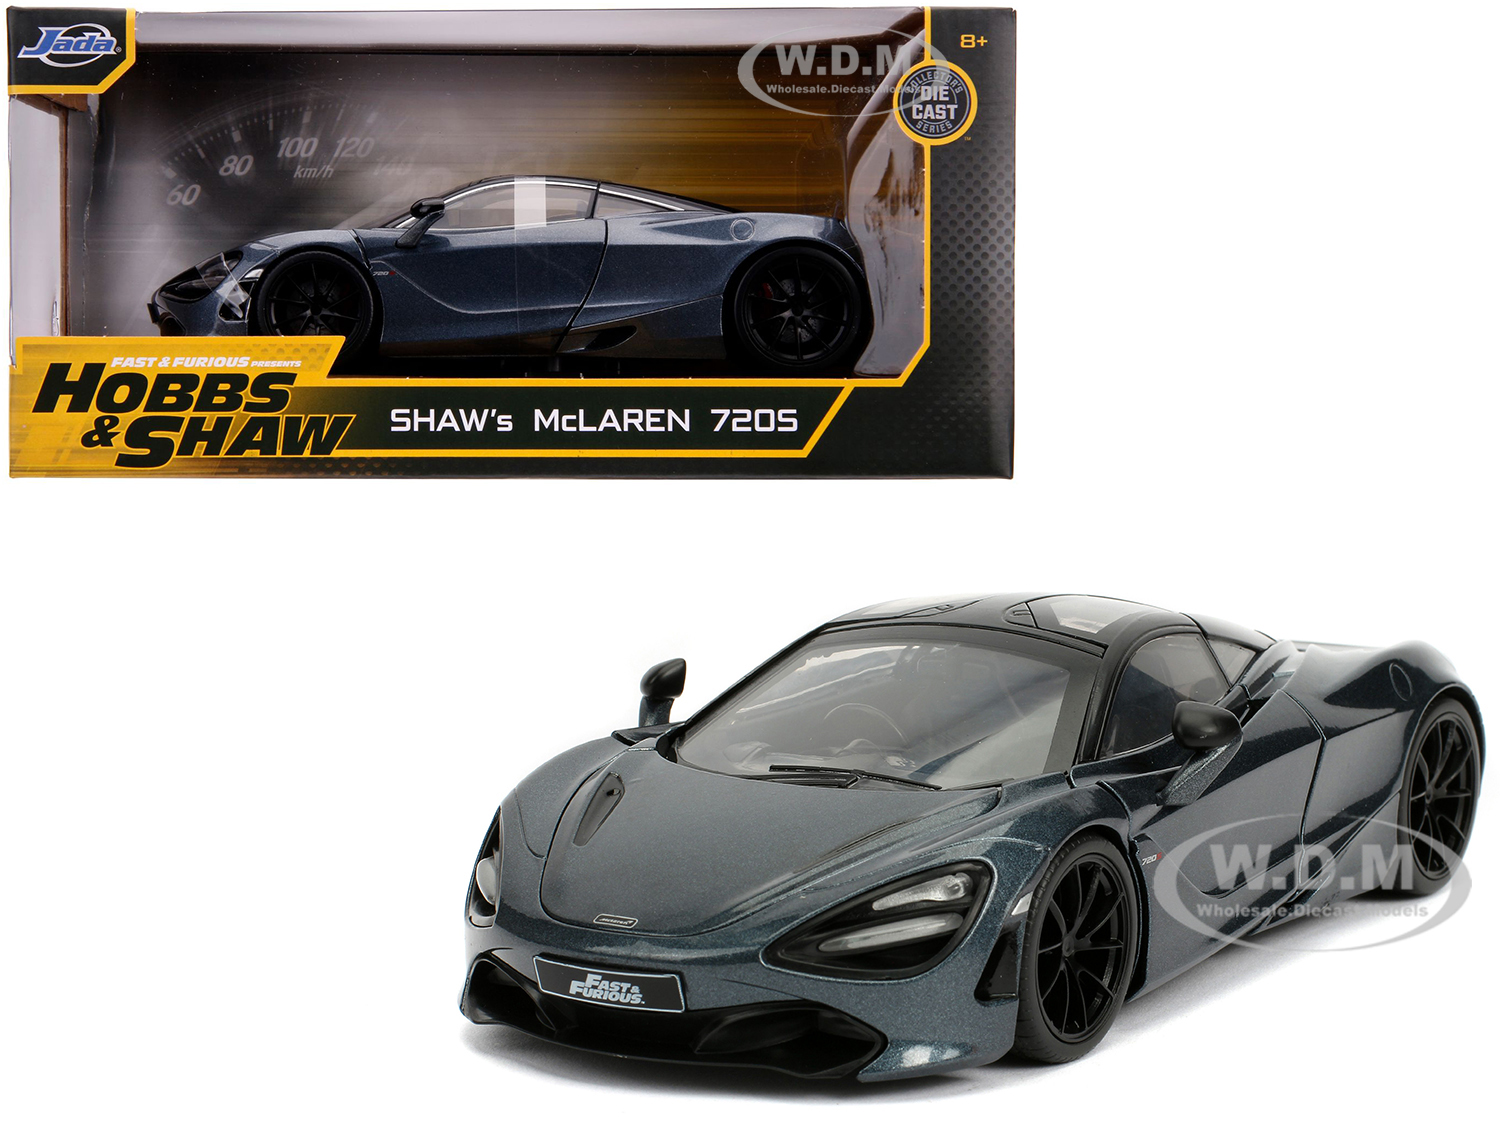 Shaws McLaren 720S RHD (Right Hand Drive) Metallic Gray "Fast &amp; Furious Presents Hobbs &amp; Shaw" (2019) Movie 1/24 Diecast Model Car by Jada